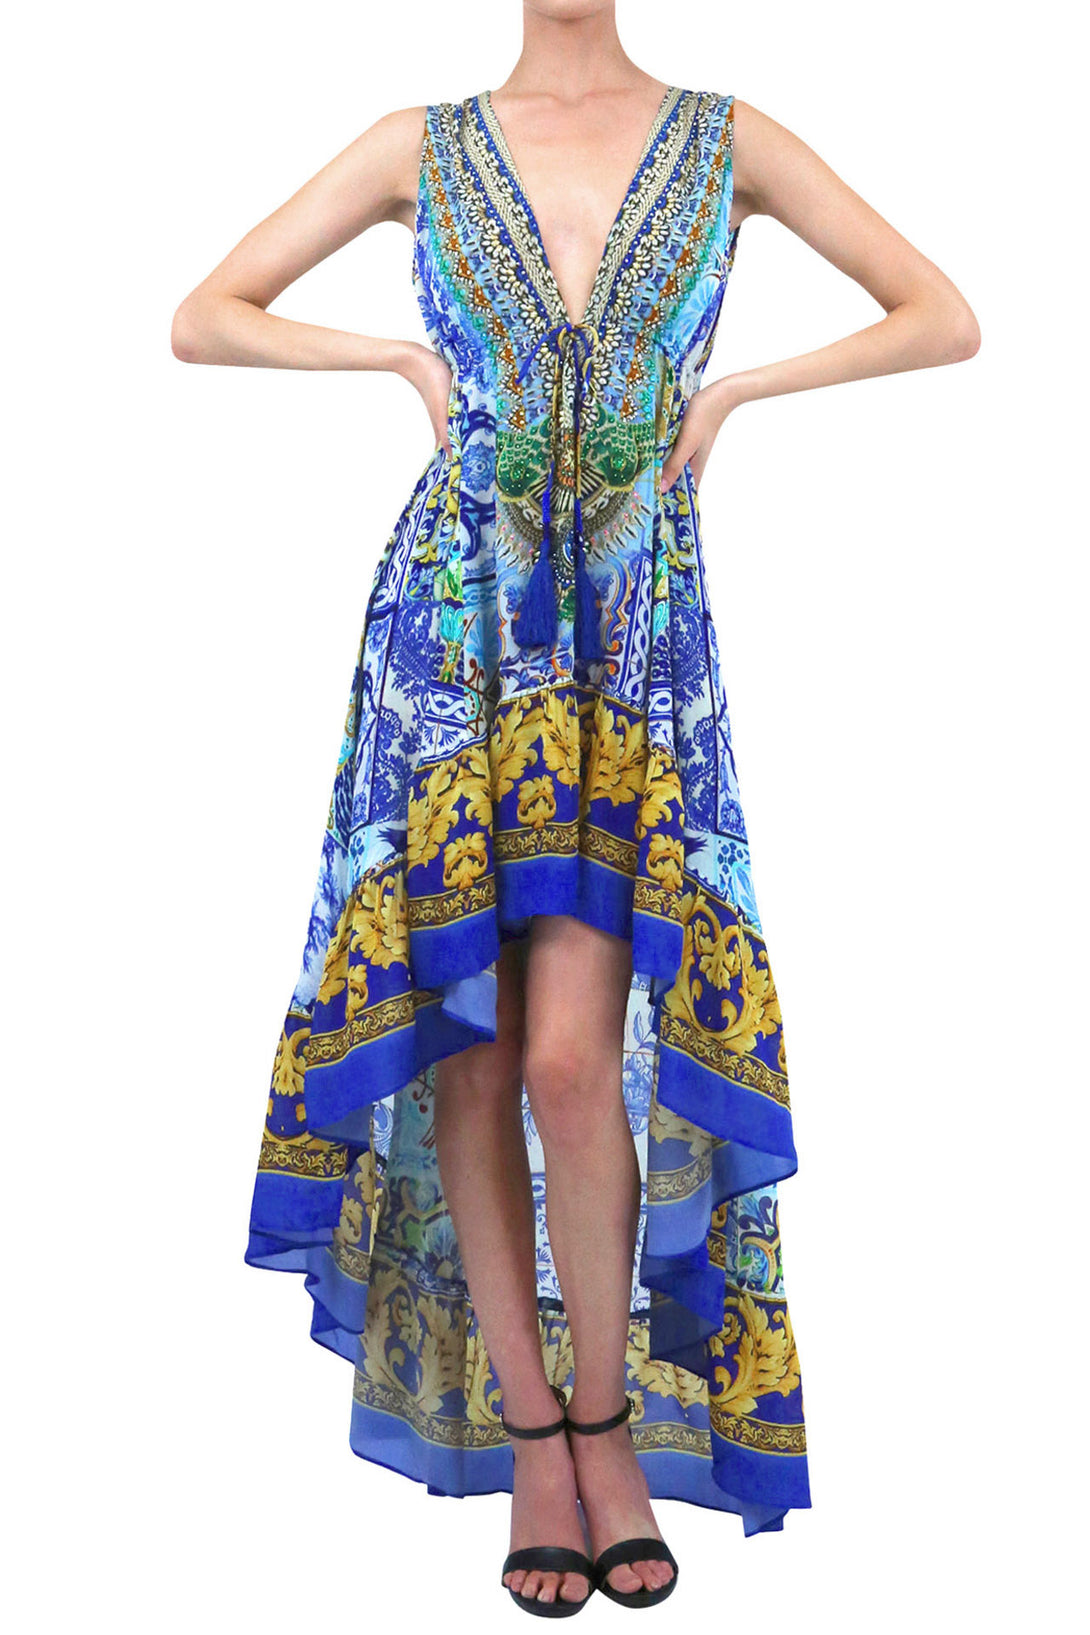  blue maxi dresses for women, high low evening dresses, backless maxi dress, Shahida Parides, maxi dresses for women,